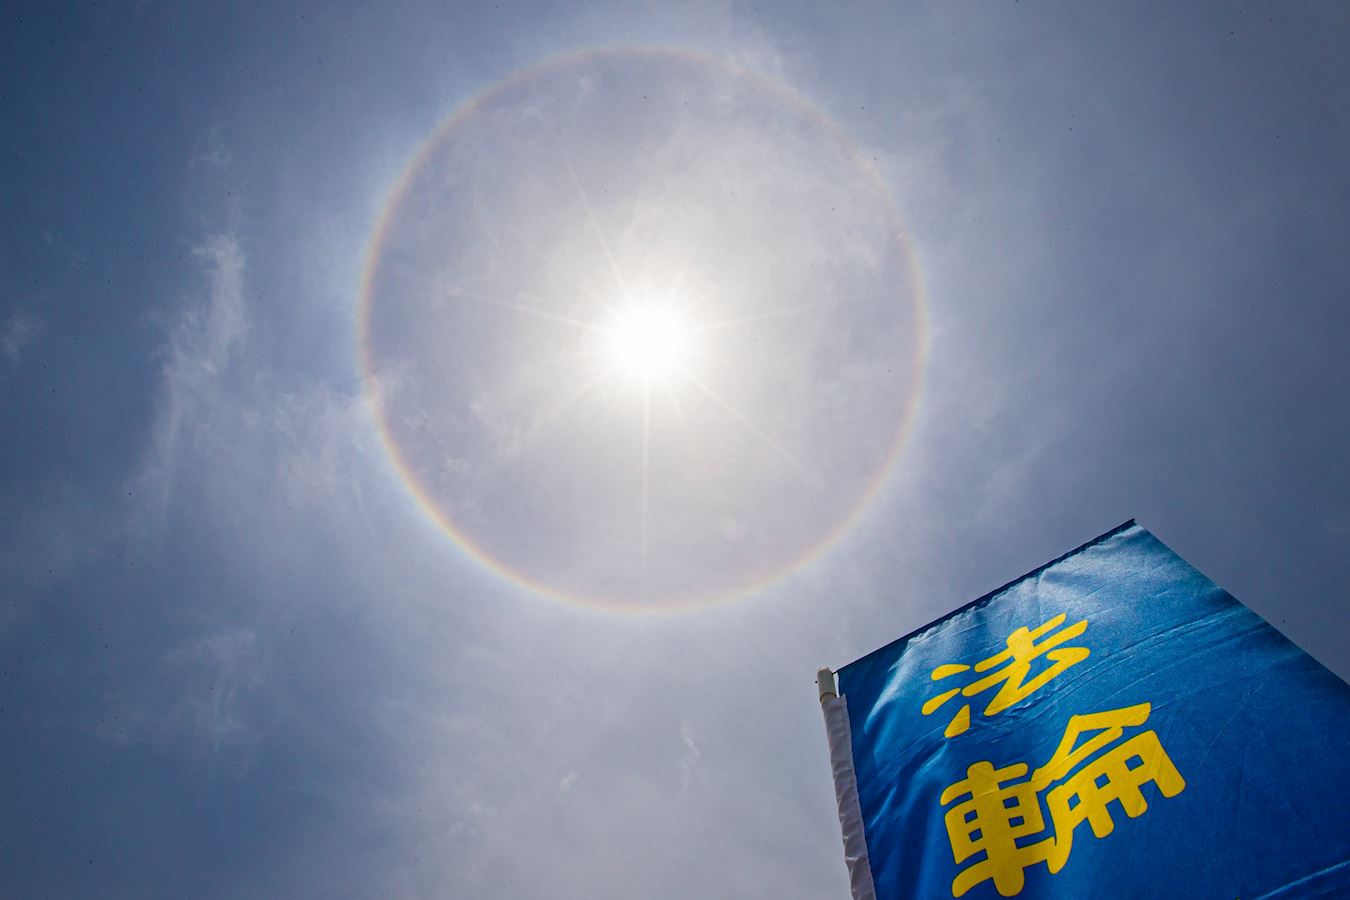 Image for article Taiwan: Halo solar multicolorido aparece no céu enquanto milhares de praticantes formam caracteres para comemorar o Dia Mundial do Falun Dafa 